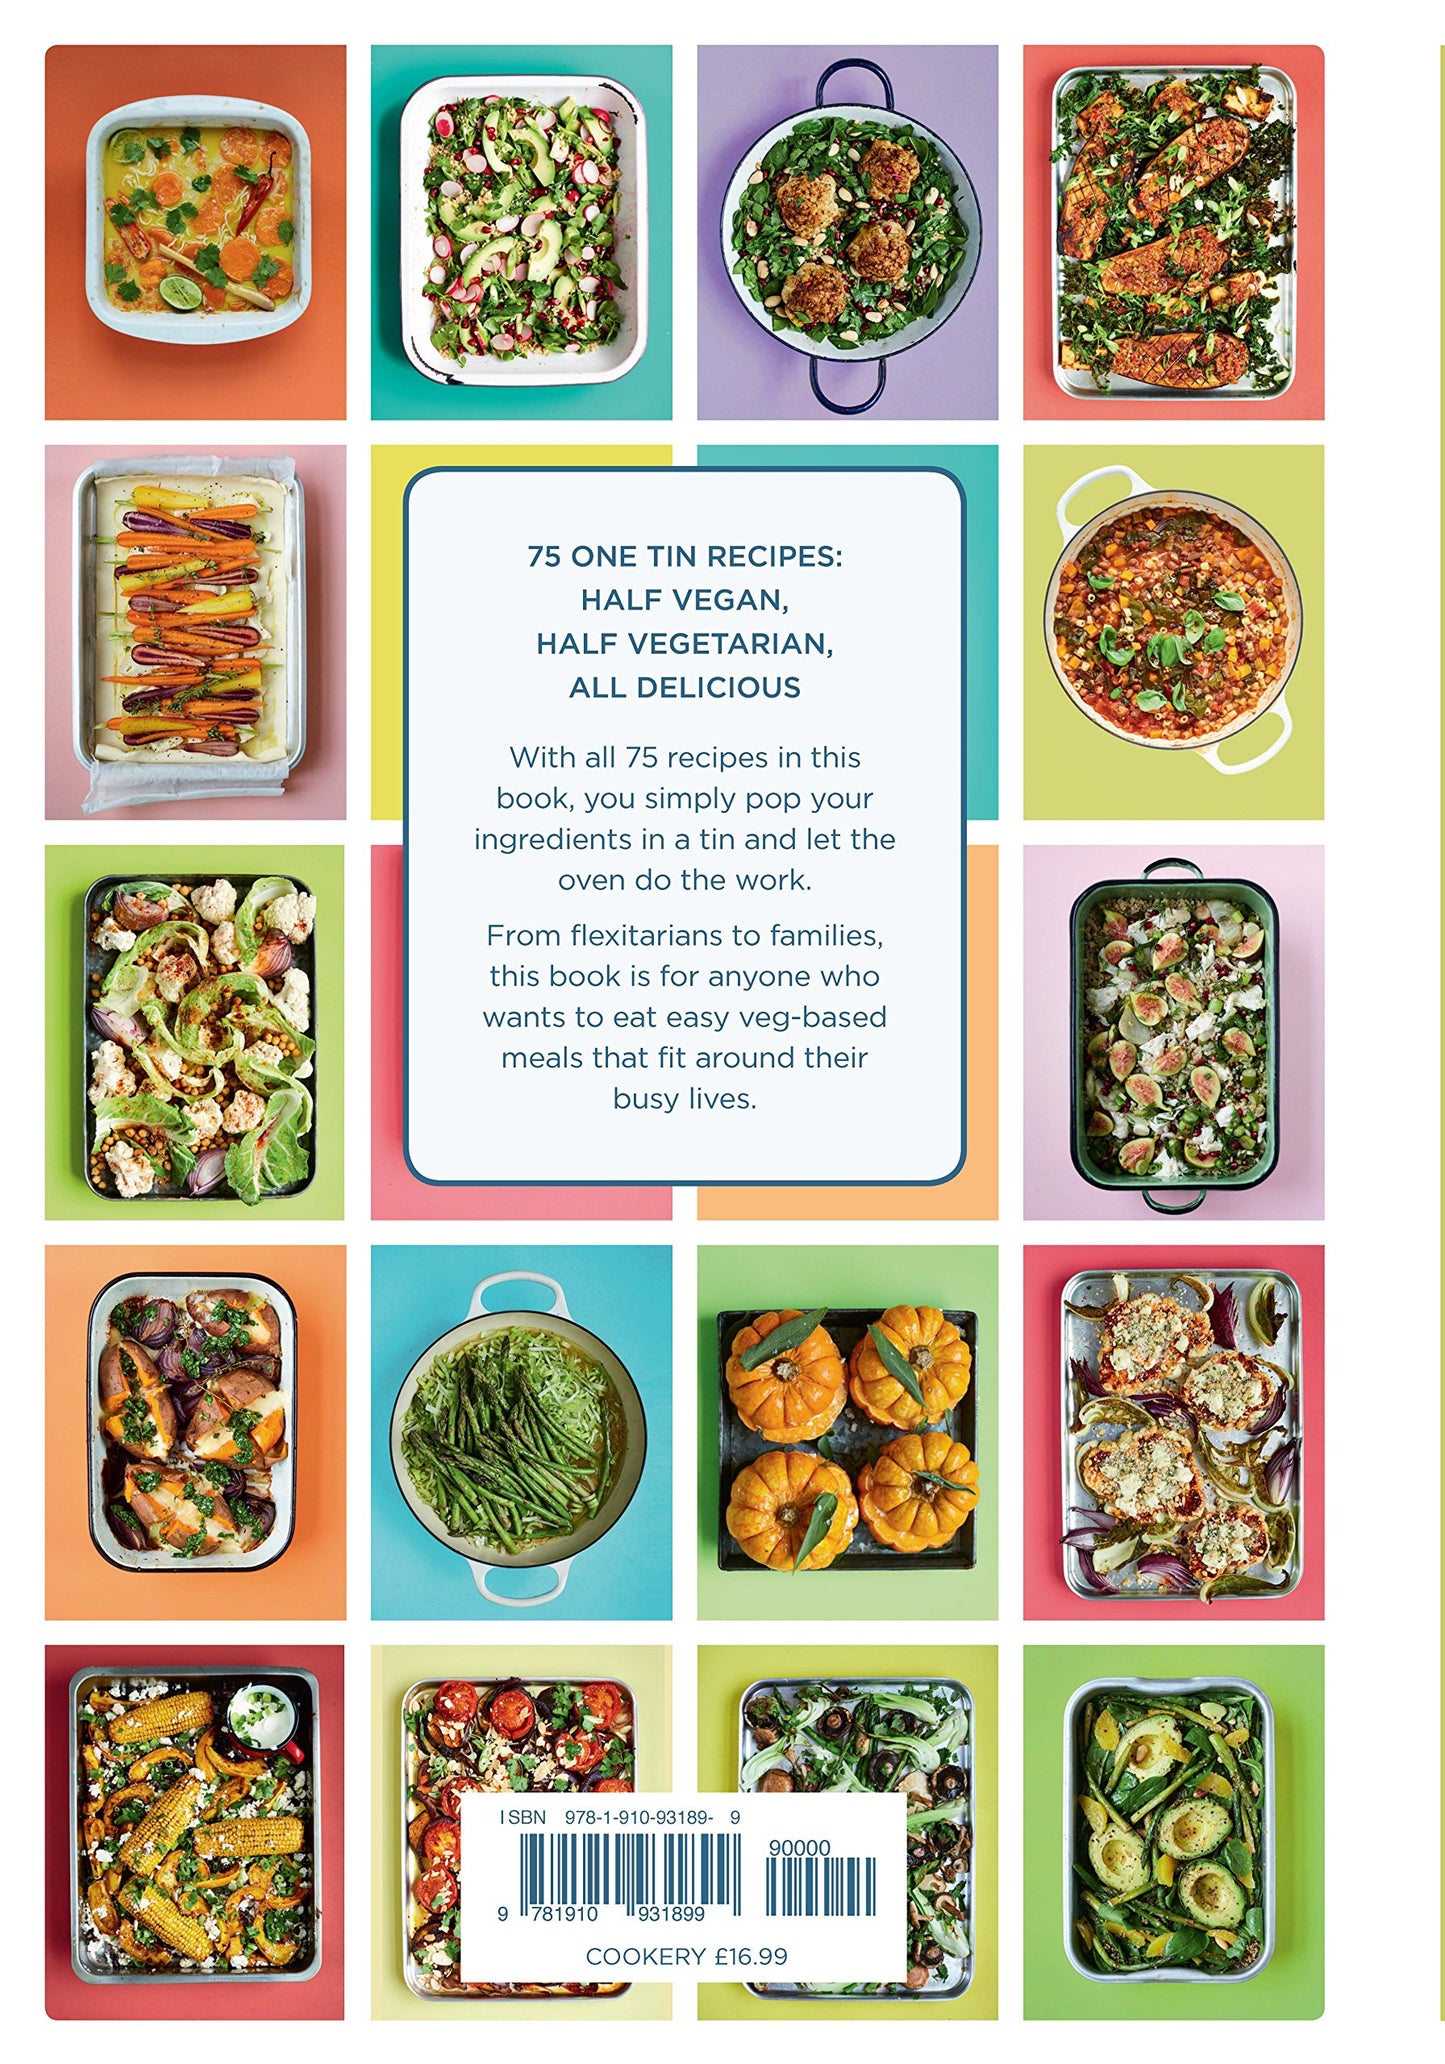 The Green Roasting Tin: Vegan & Vegetarian One Dish Dinners Book